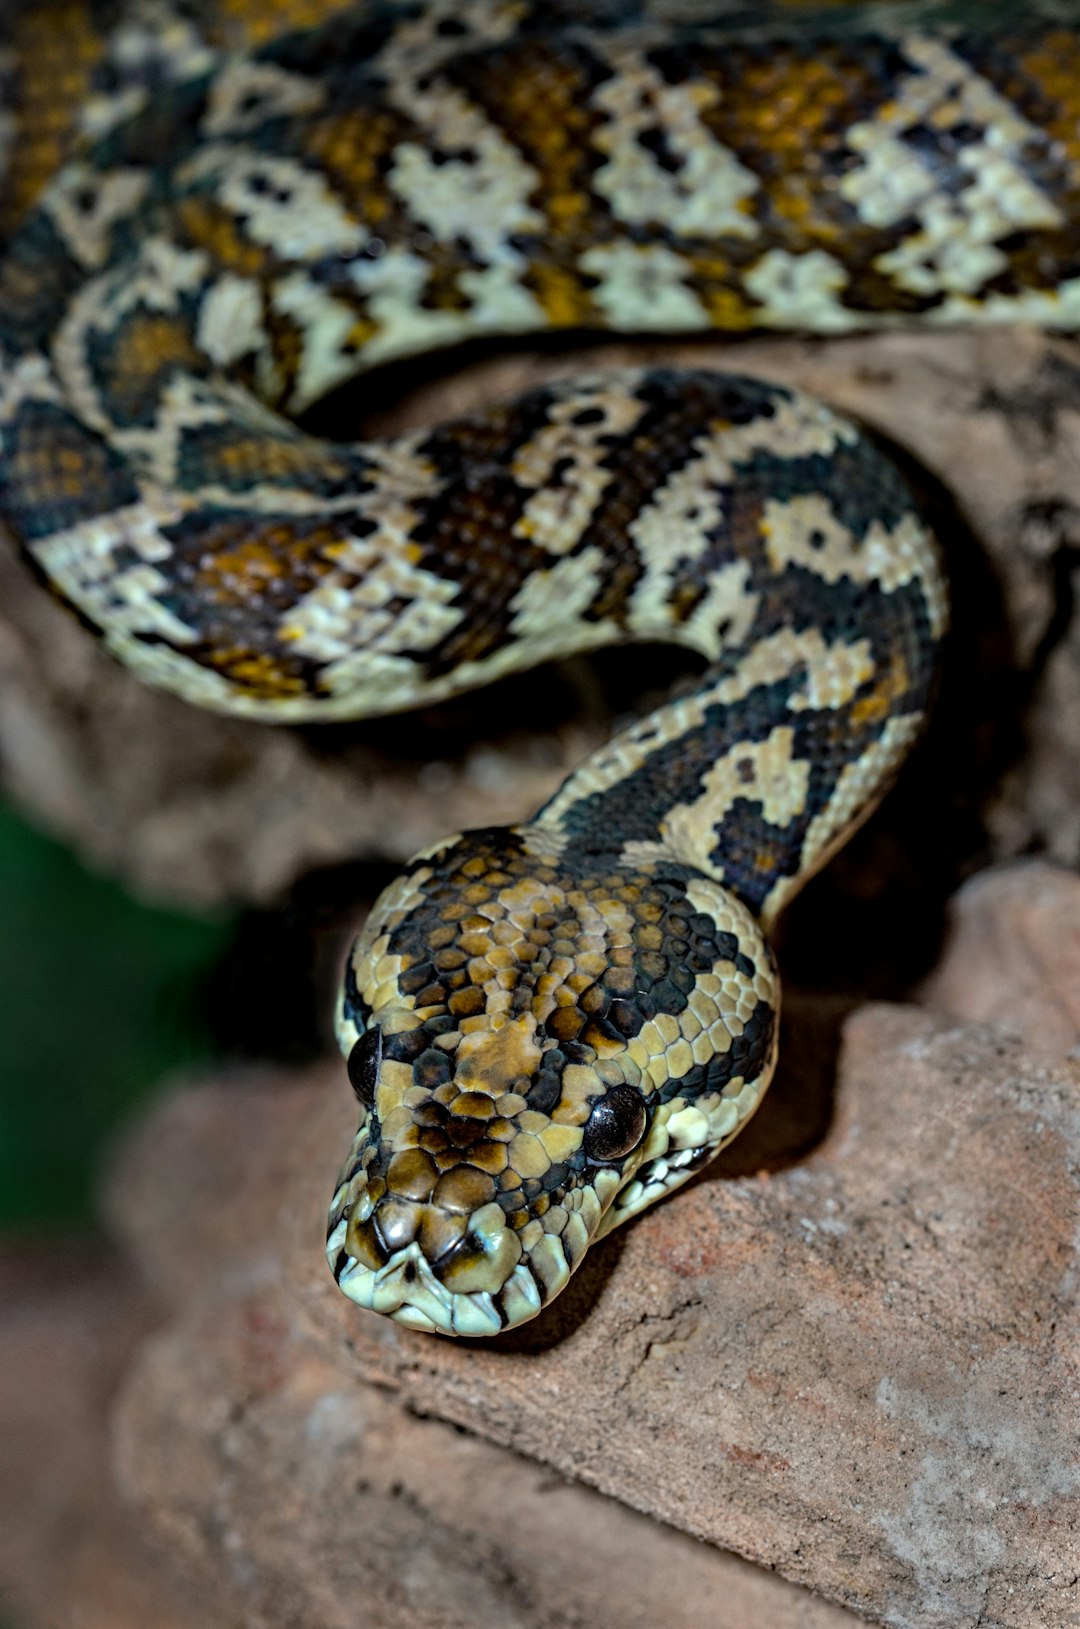 The pretty Darwin colour form of the carpet python Morelia spiloata.